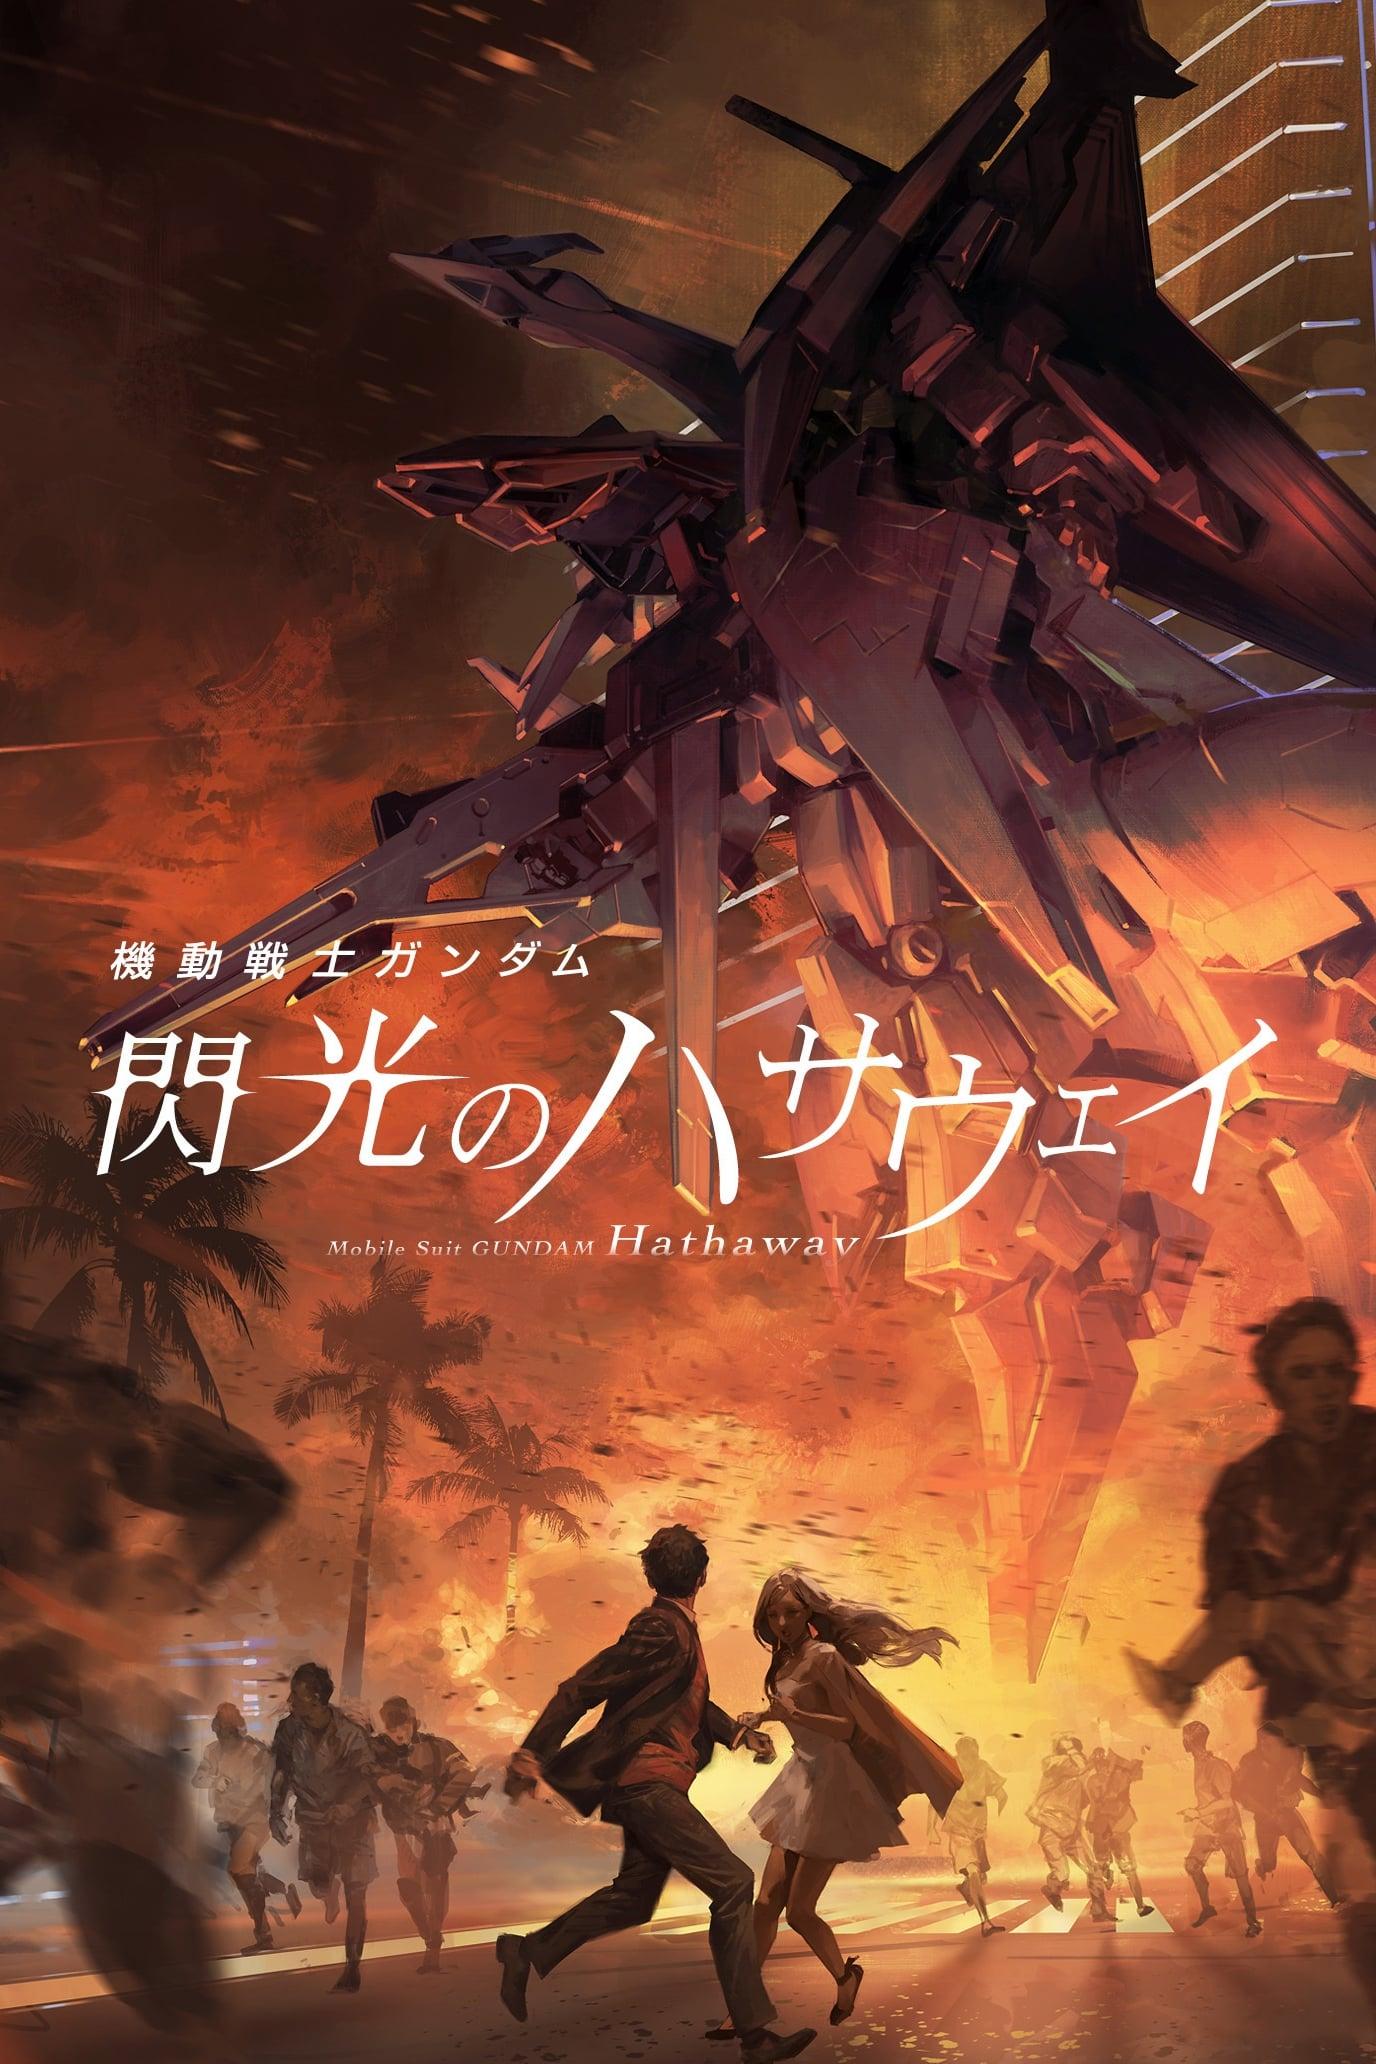 Mobile Suit Gundam Hathaway poster